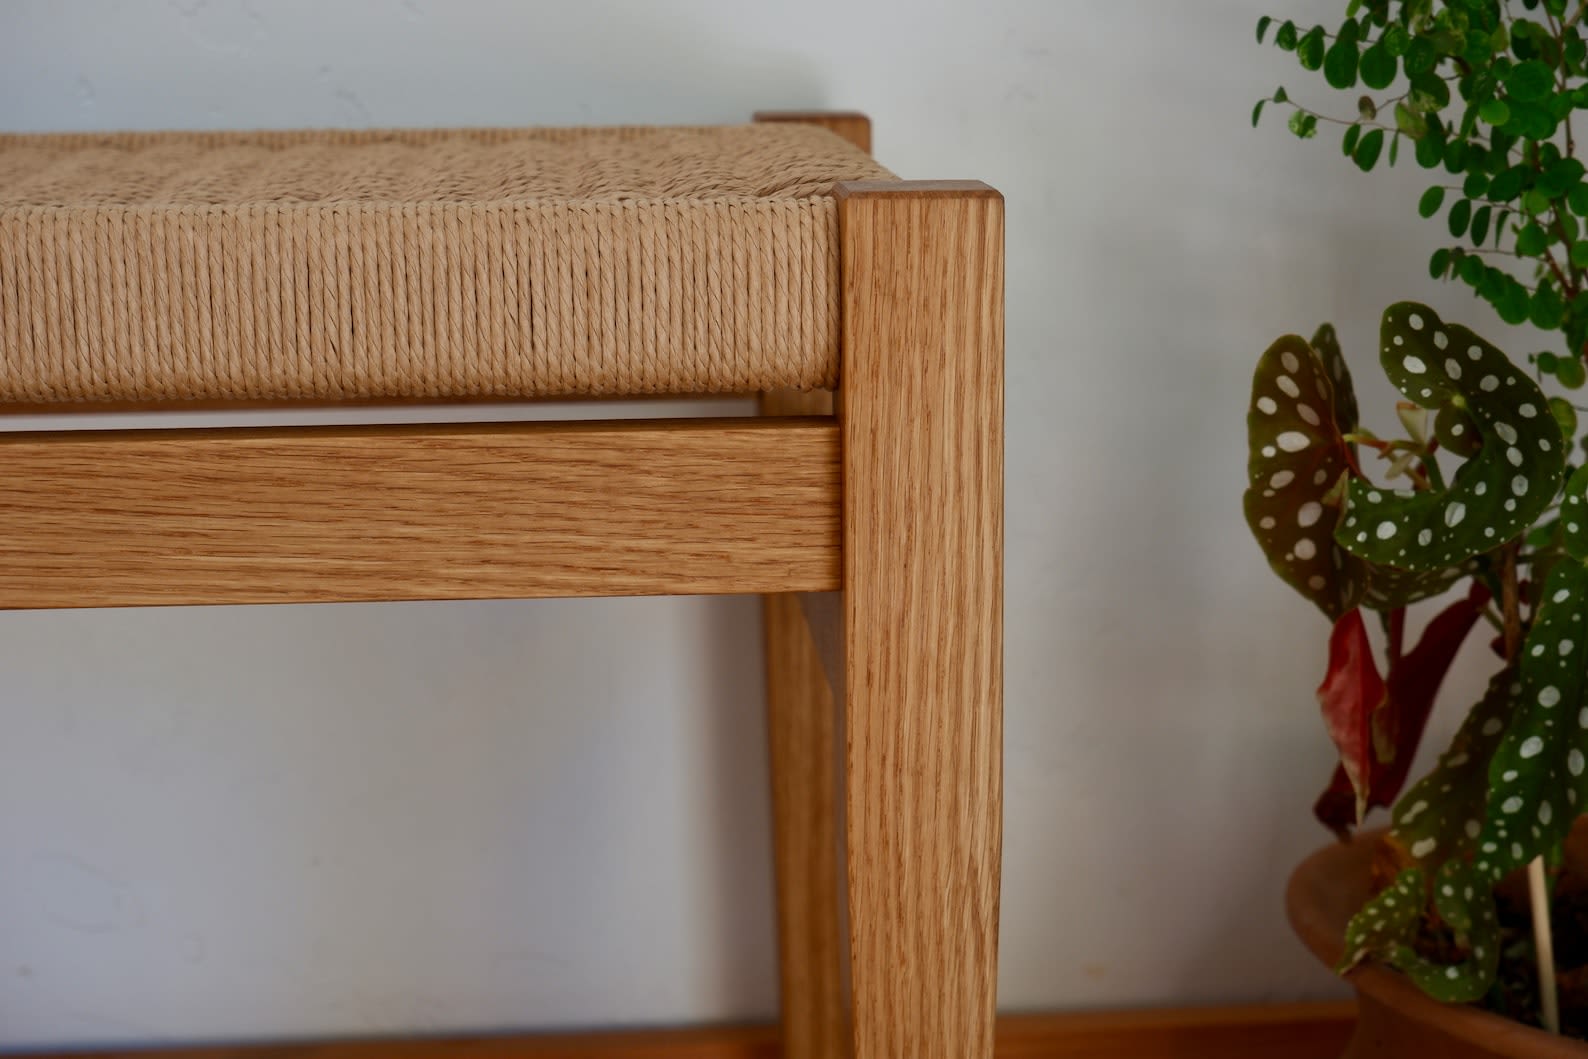 Handmade Danish Cord Bench - Walnut by Kellen Carr Studio